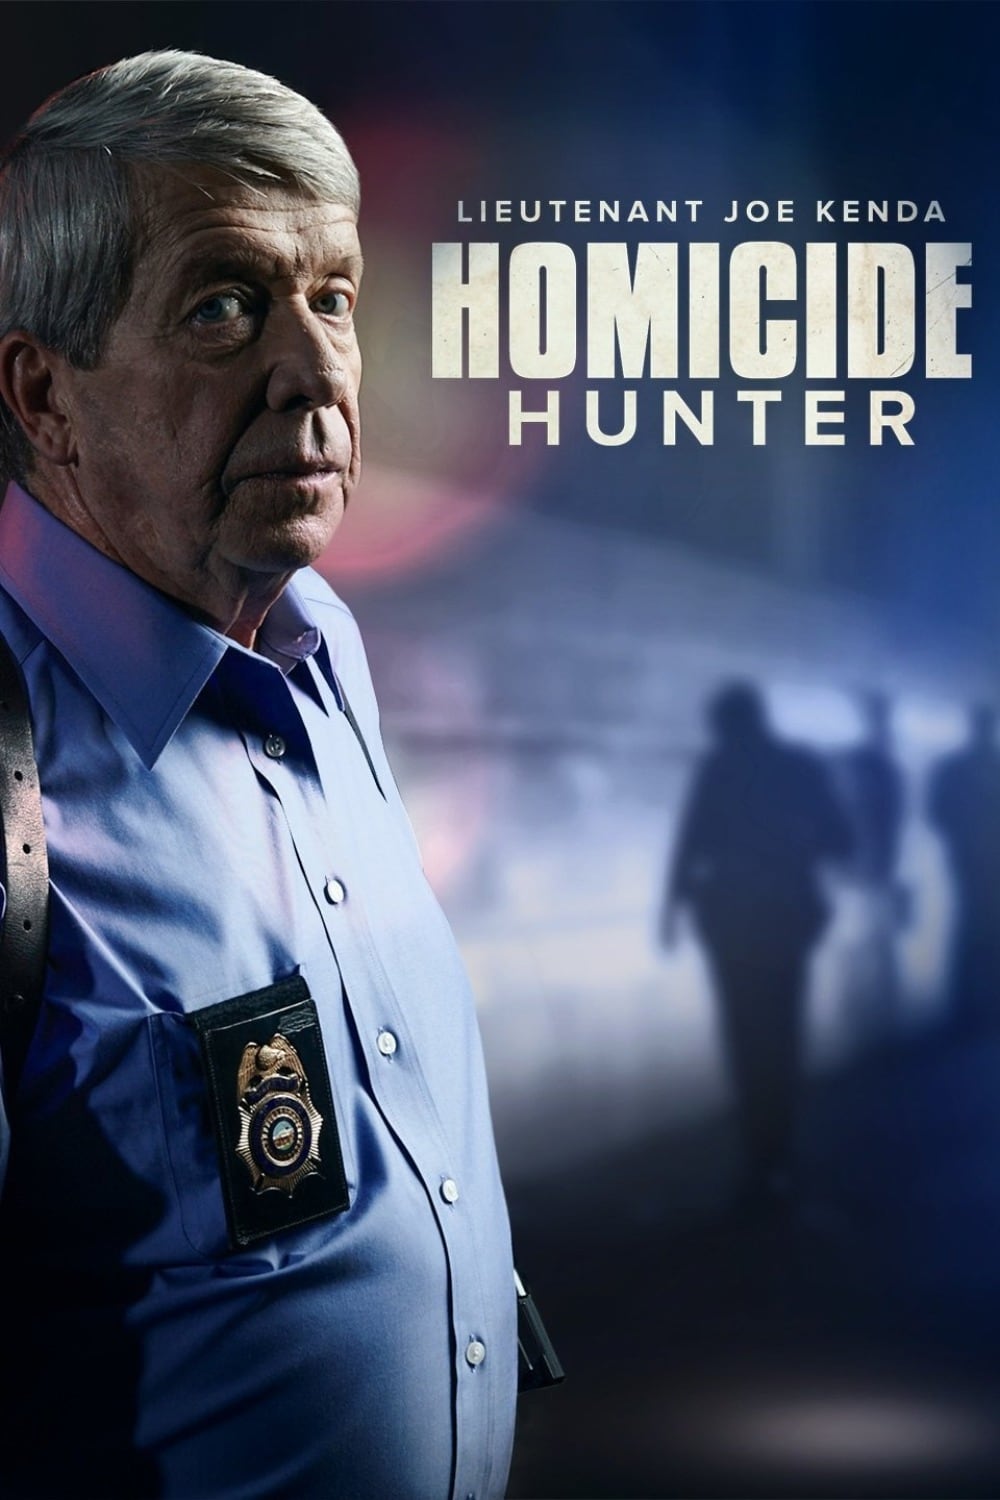 Homicide Hunter: Lt Joe Kenda (2011)